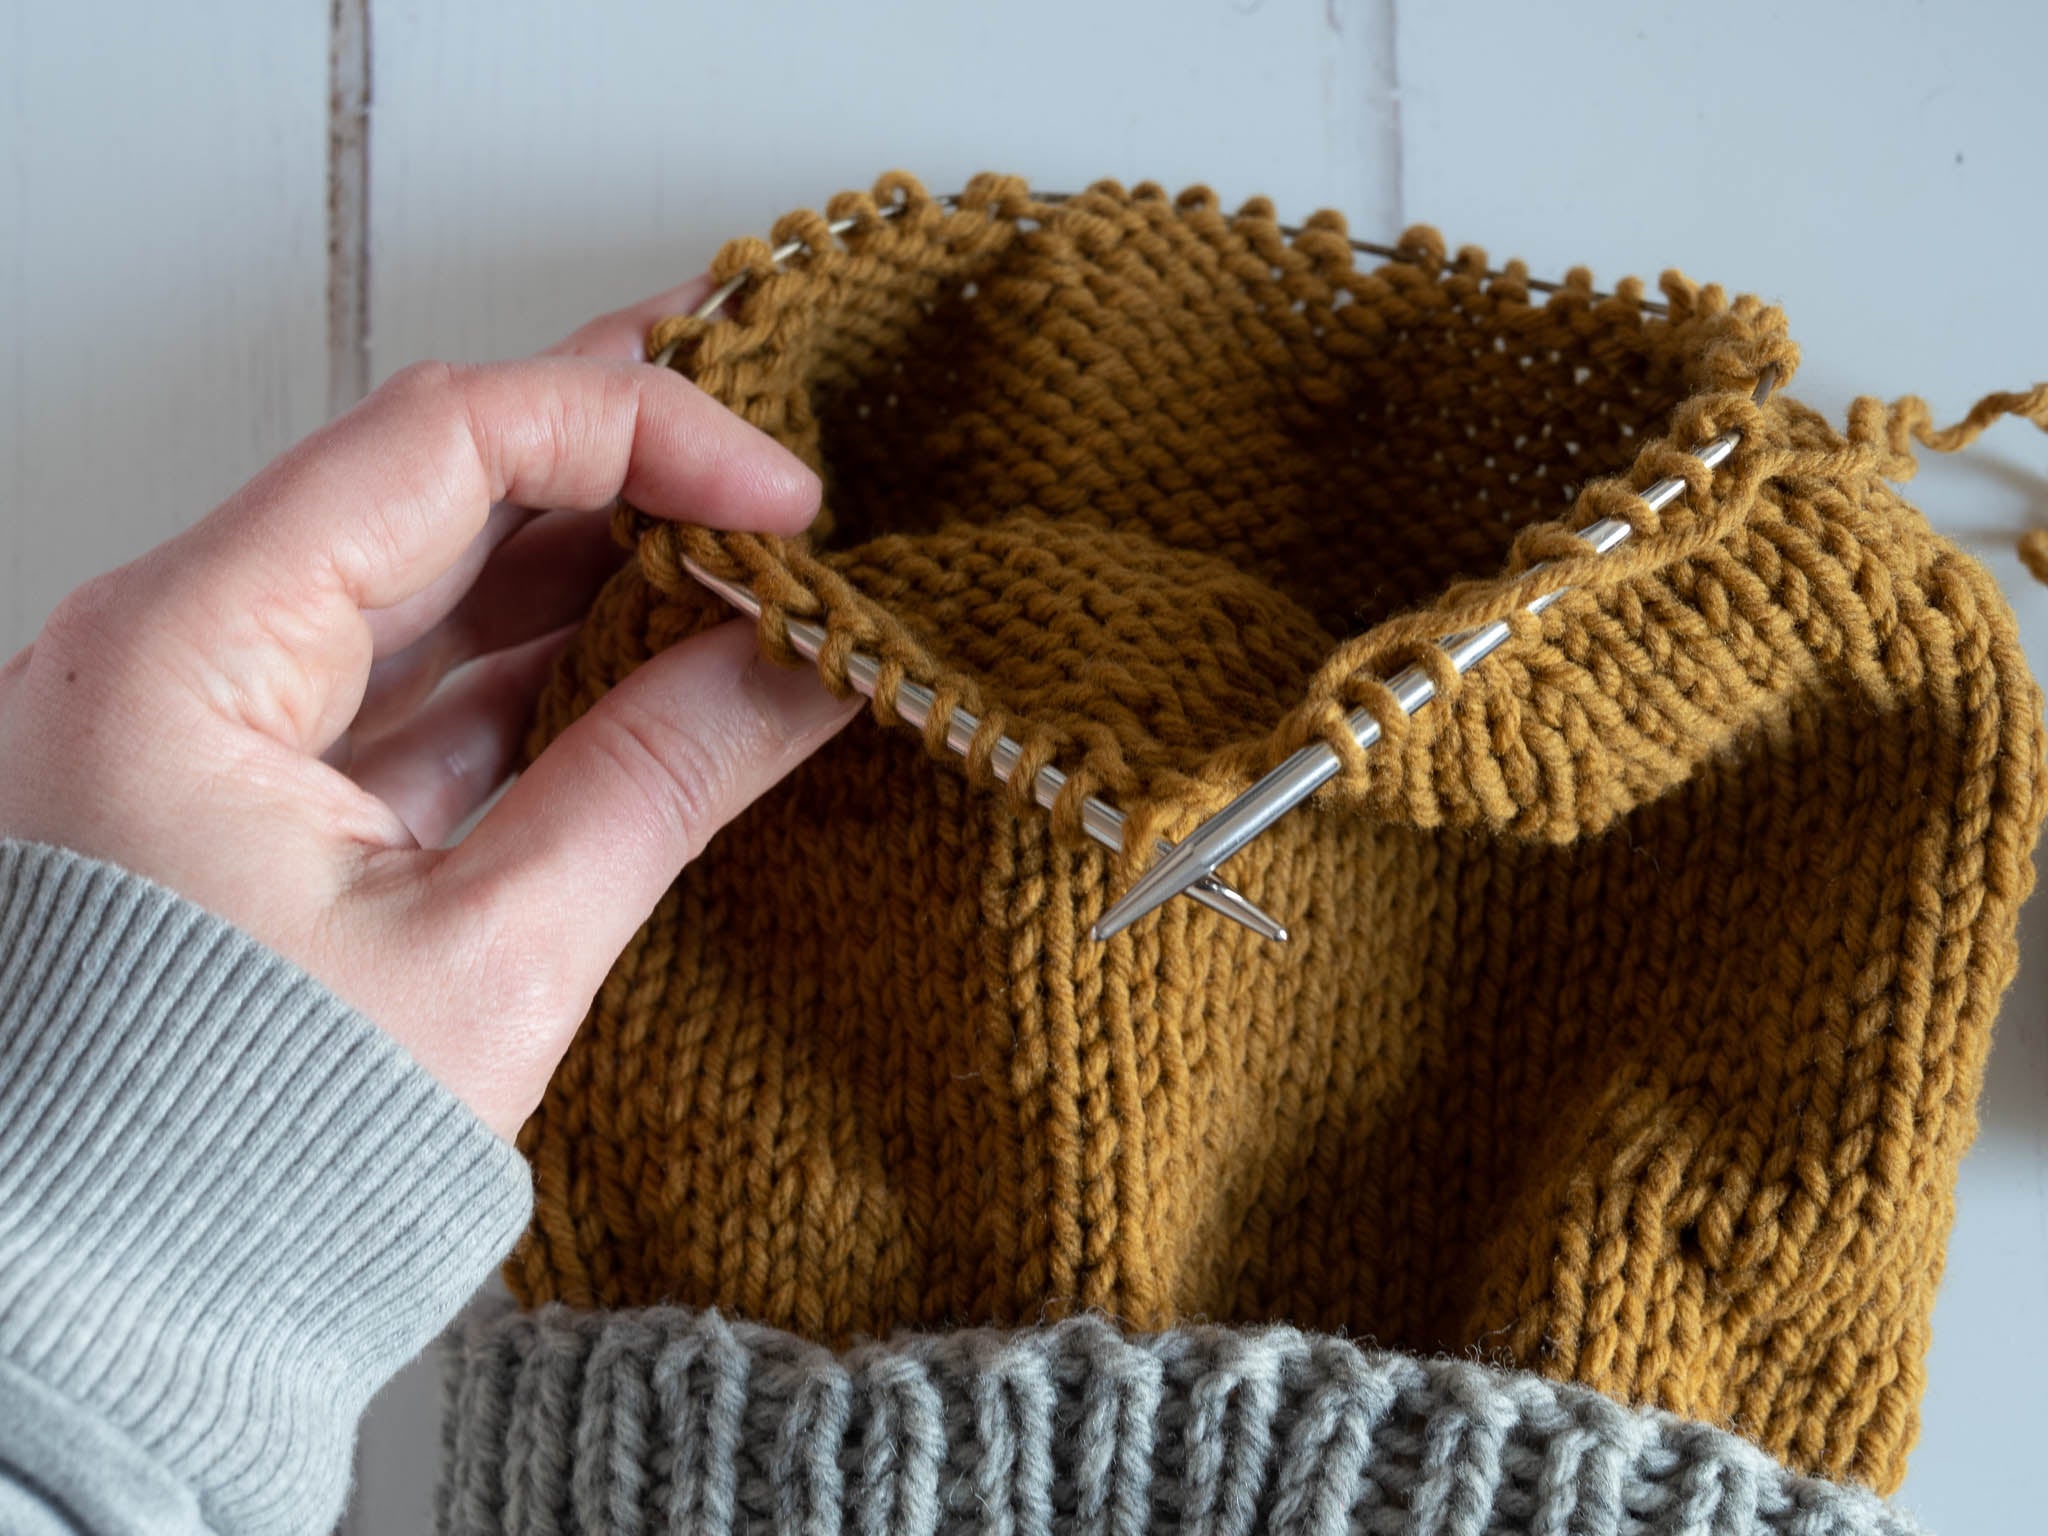 Choosing Your Knitting Needle: Circular vs. Straight